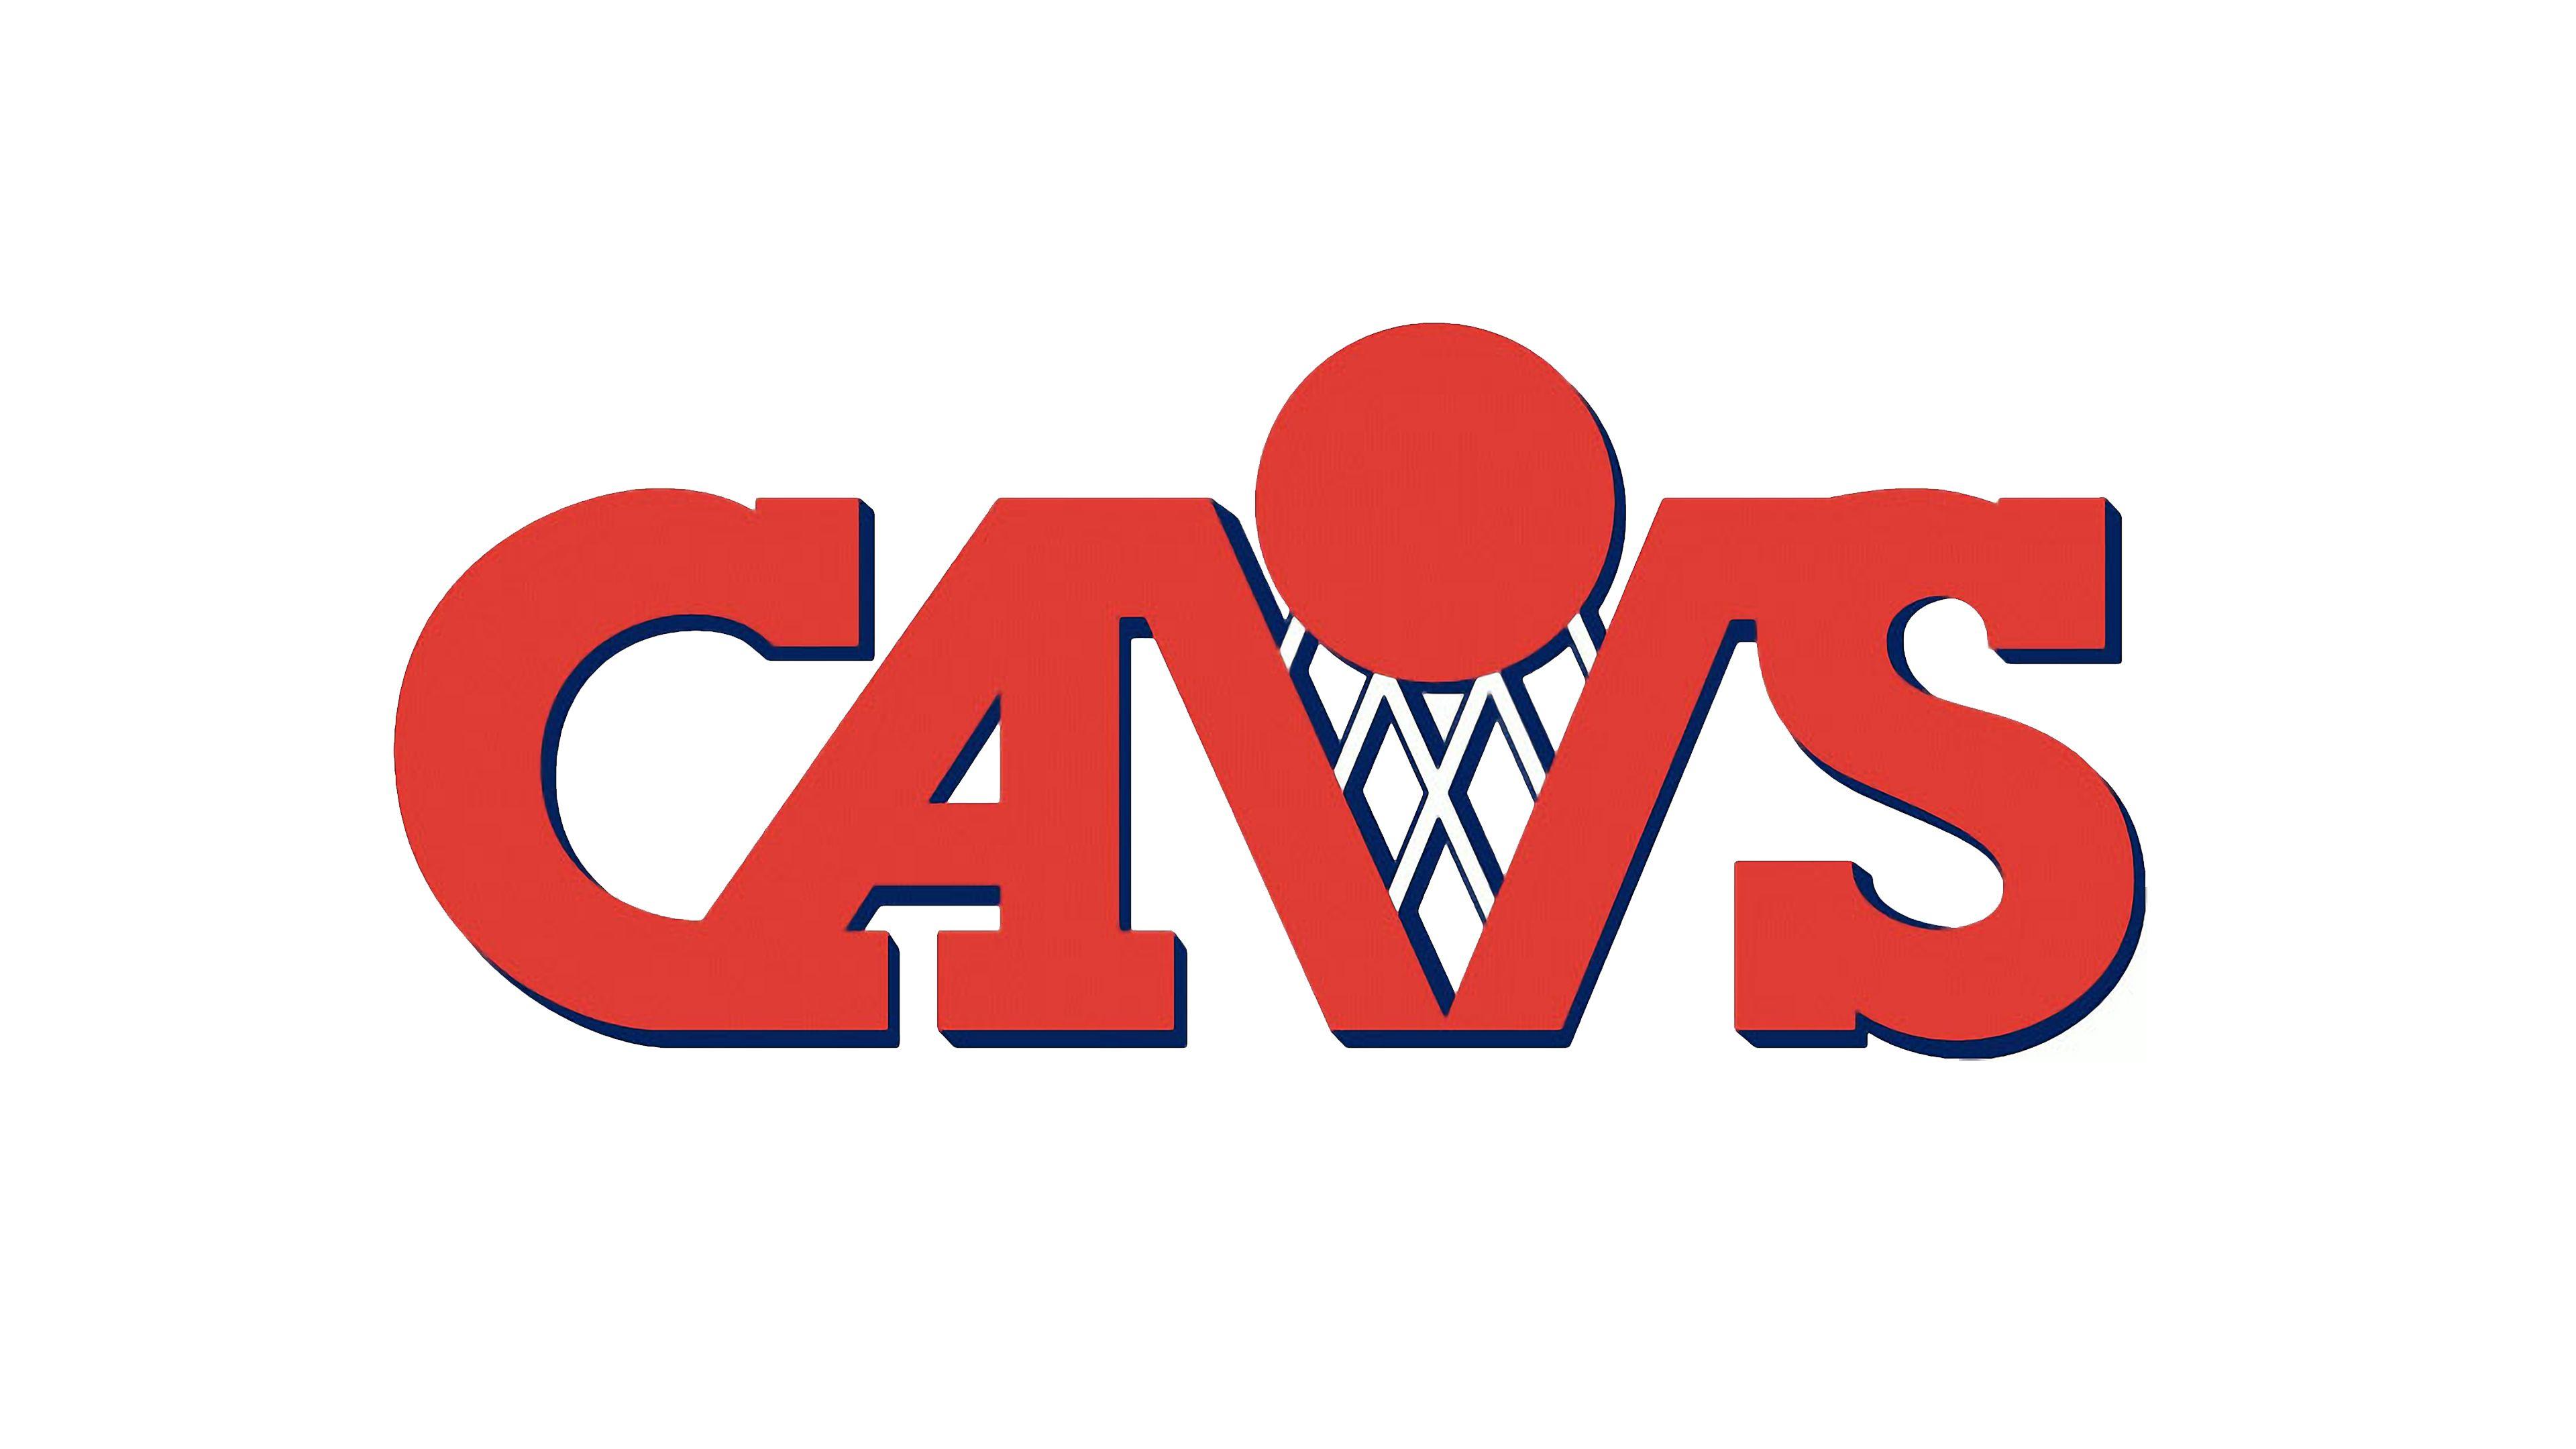 Cavs Logo - Cleveland Cavaliers Logo - Interesting History Team Name and emblem